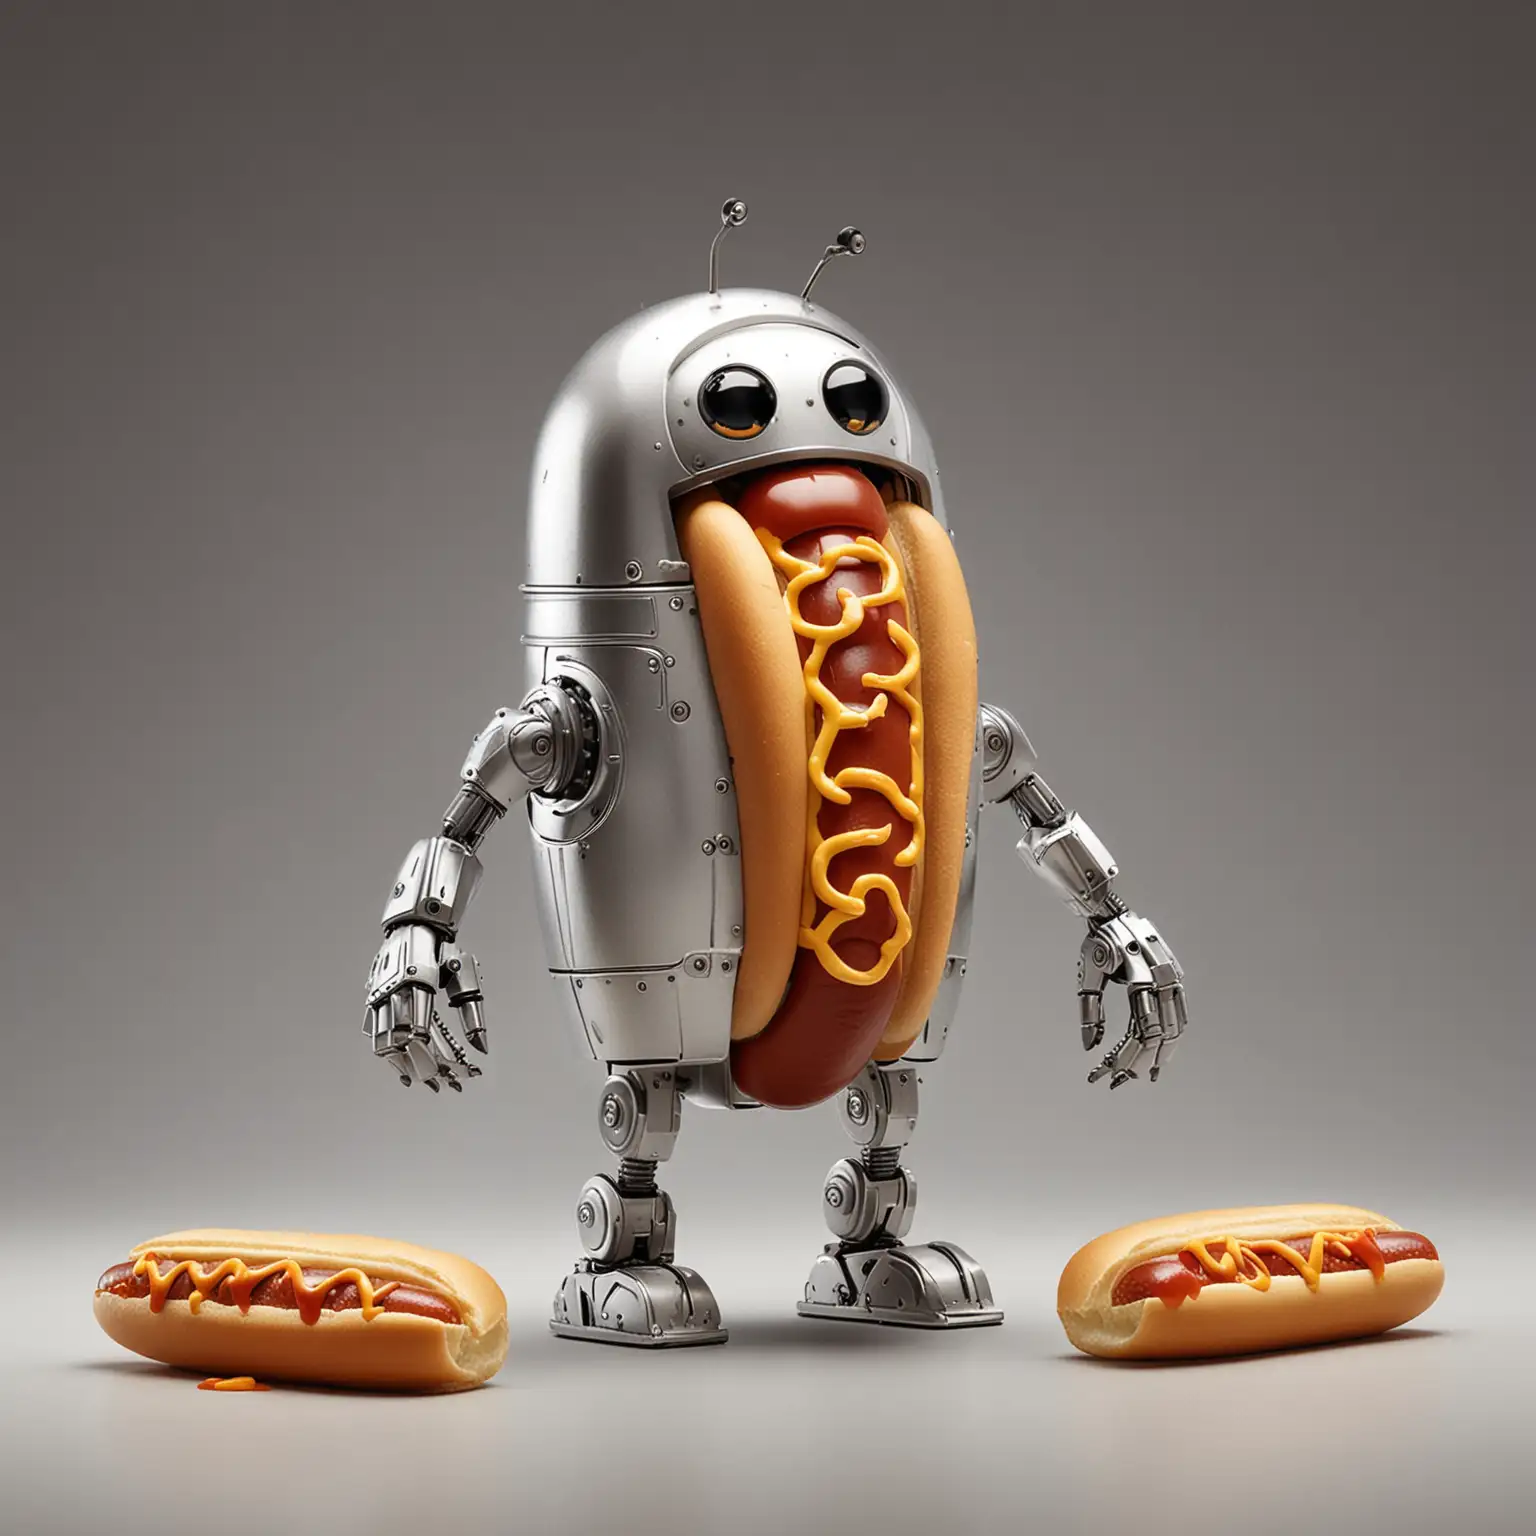 Robotic Hot Dog Bun with Futuristic Design